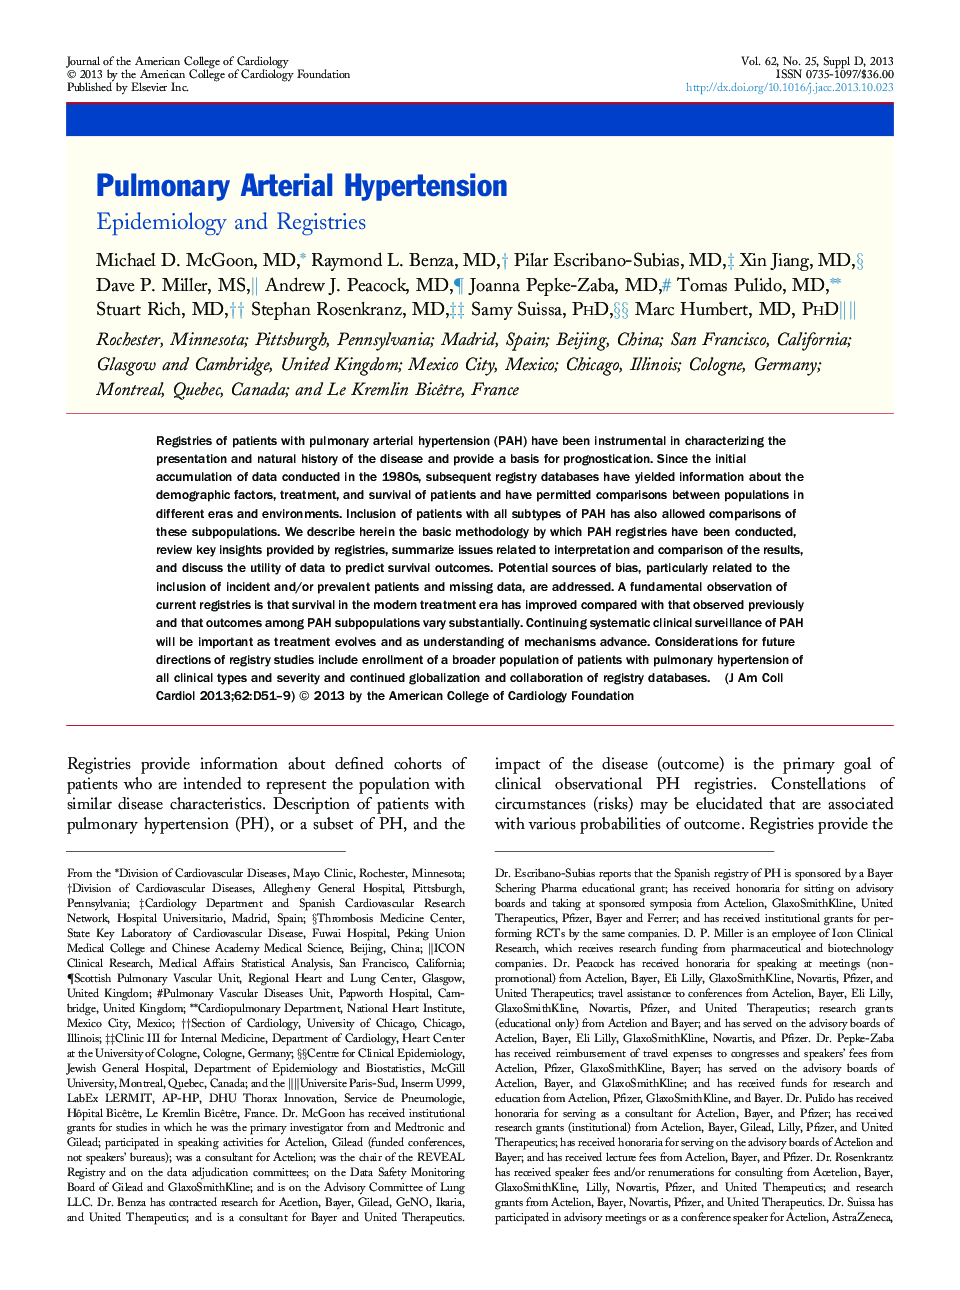 Pulmonary Arterial Hypertension : Epidemiology and Registries